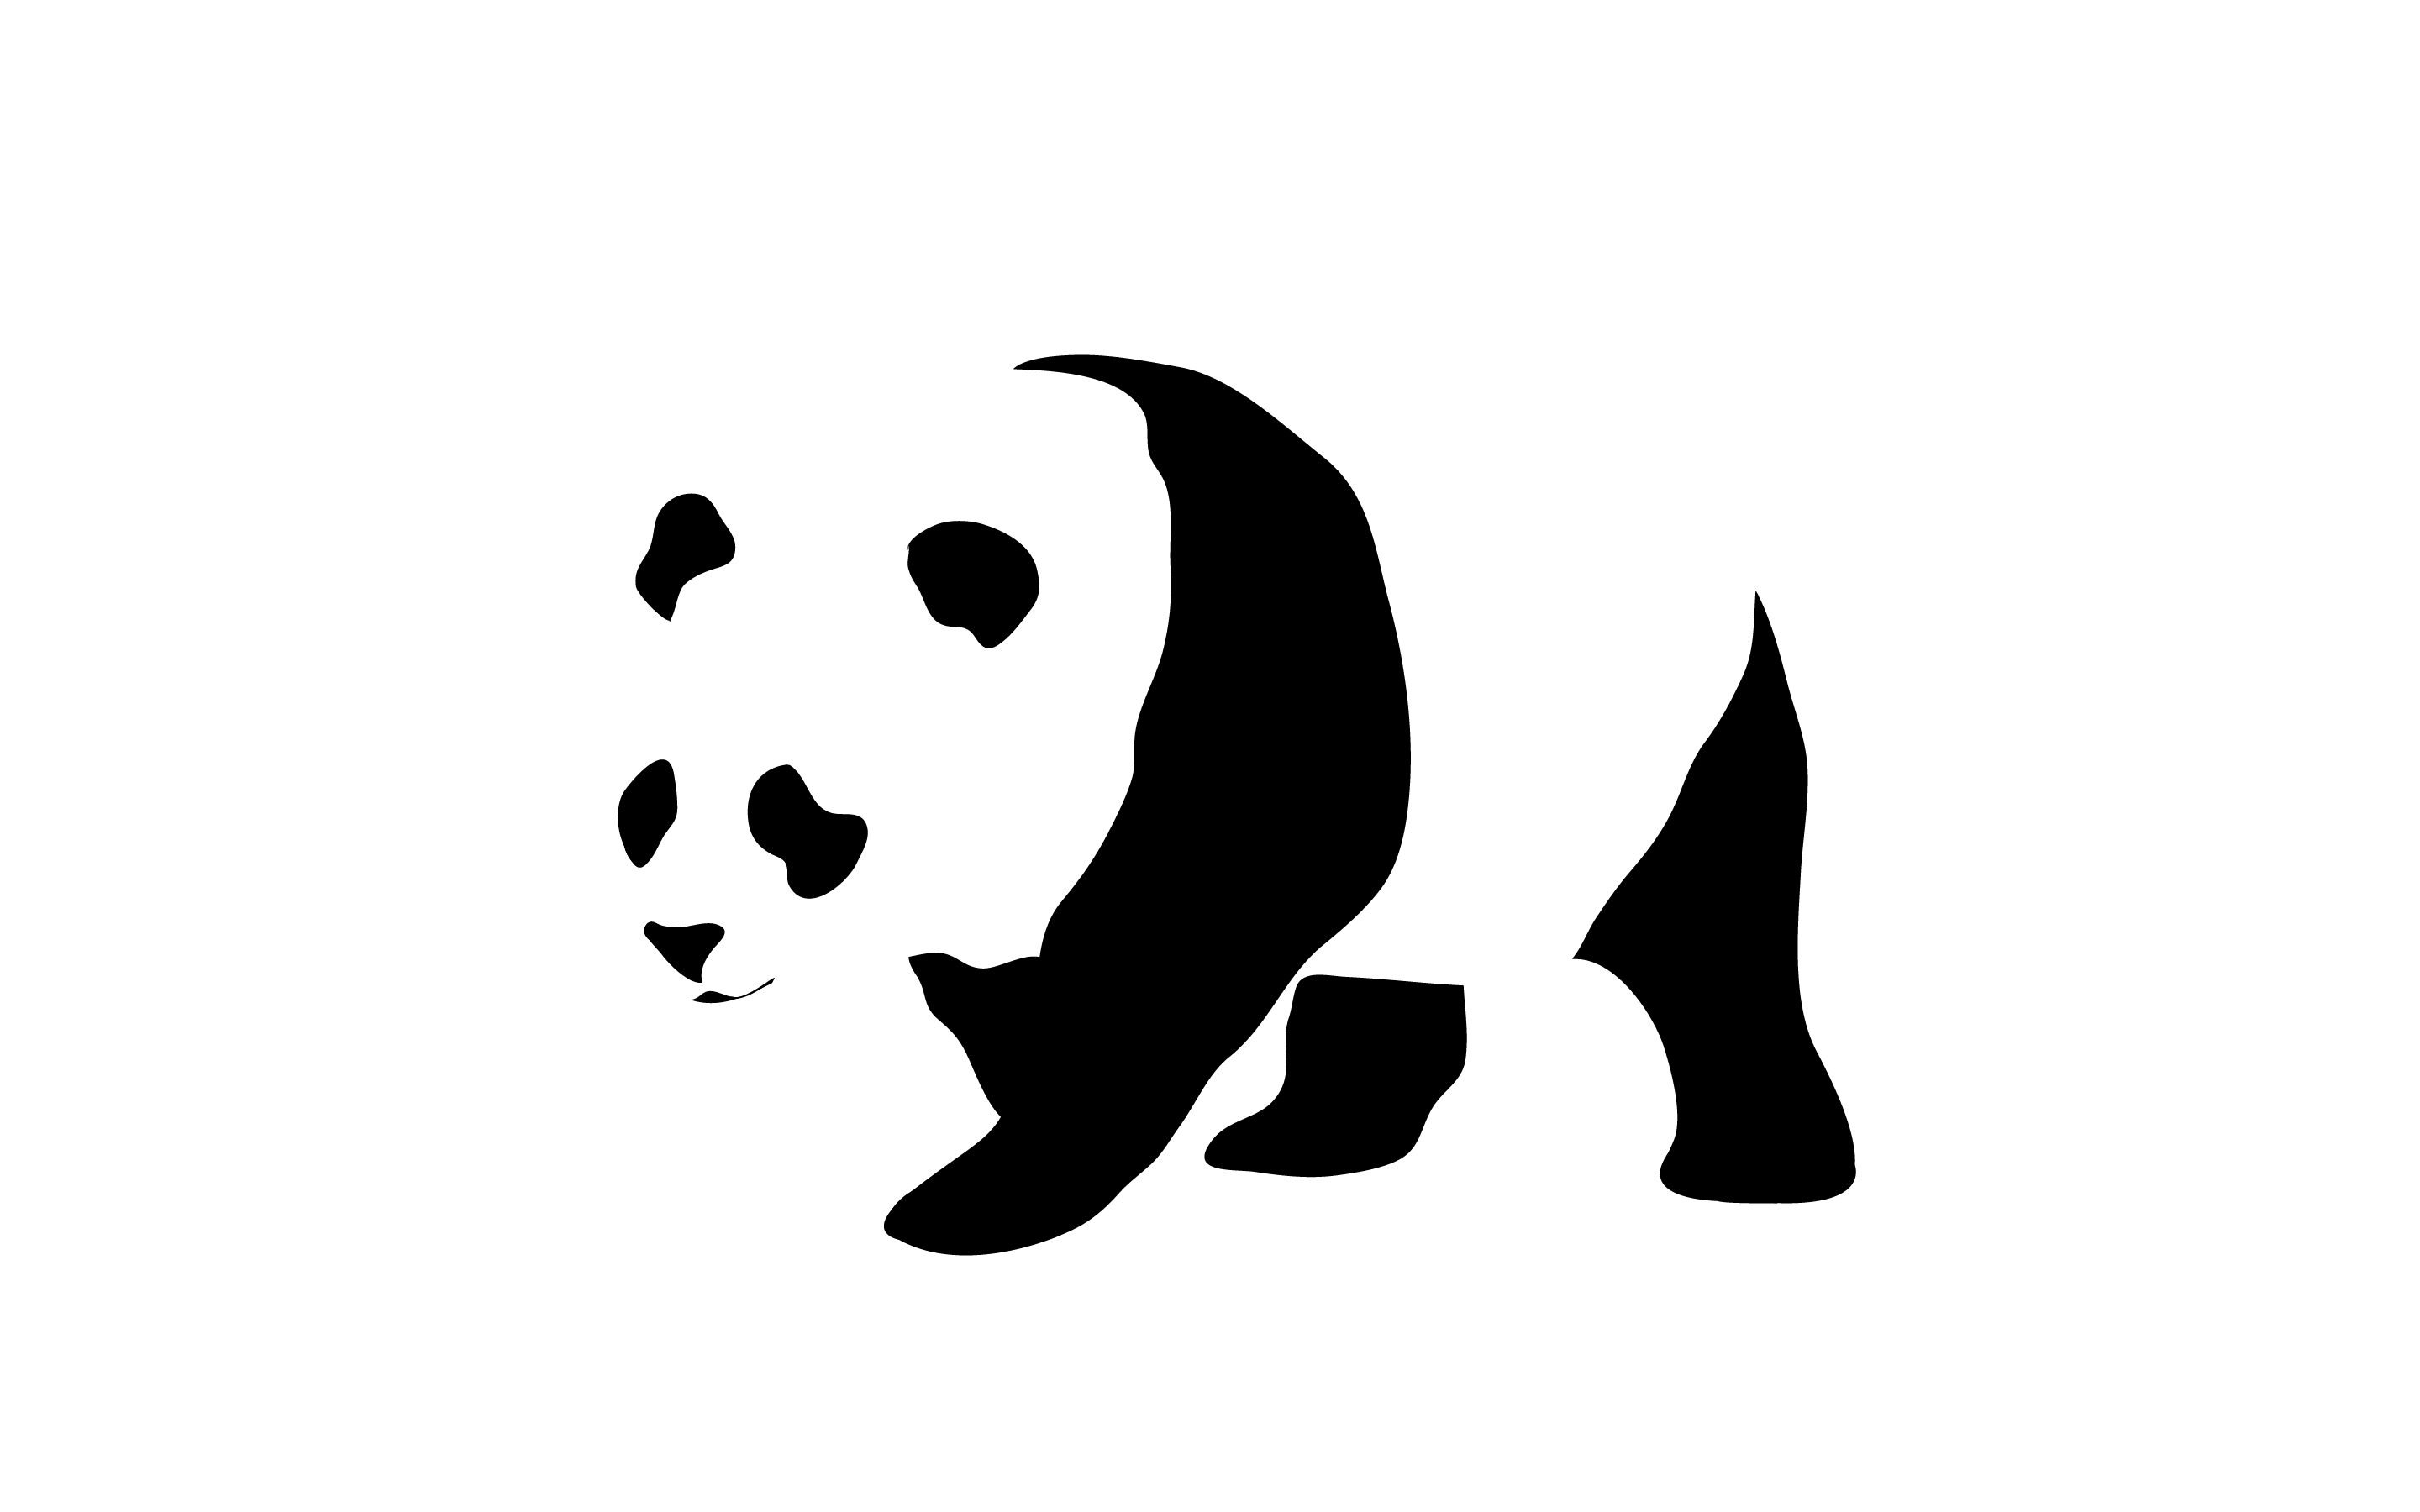 General 2880x1800 minimalism panda animals mammals bears simple background white background white